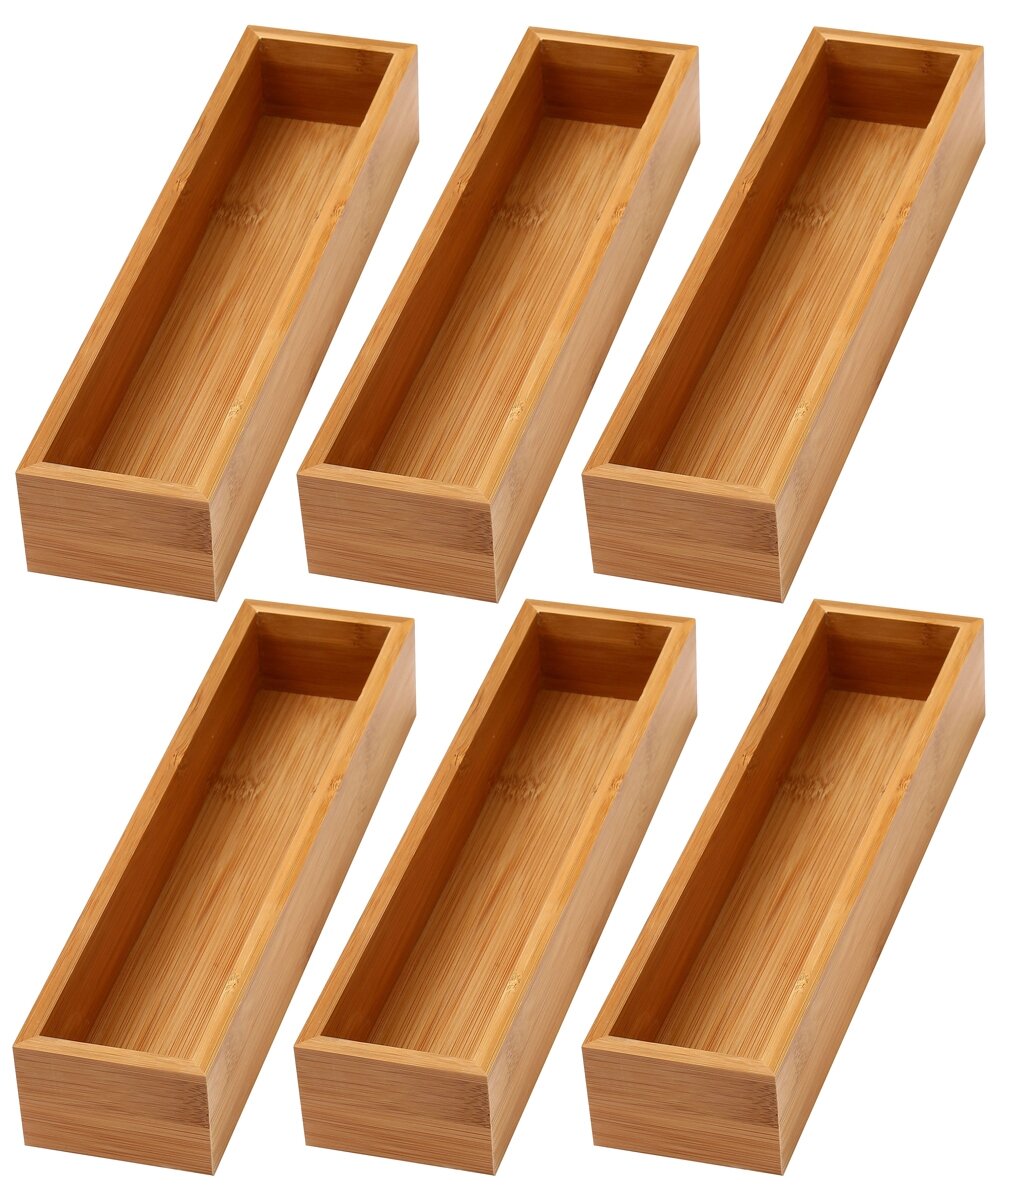 Drawer Organizer Bamboo Storage Box - Kitchen Bathroom Desk Wood Stackable Tray 9X6x2.5Inch Rebrilliant